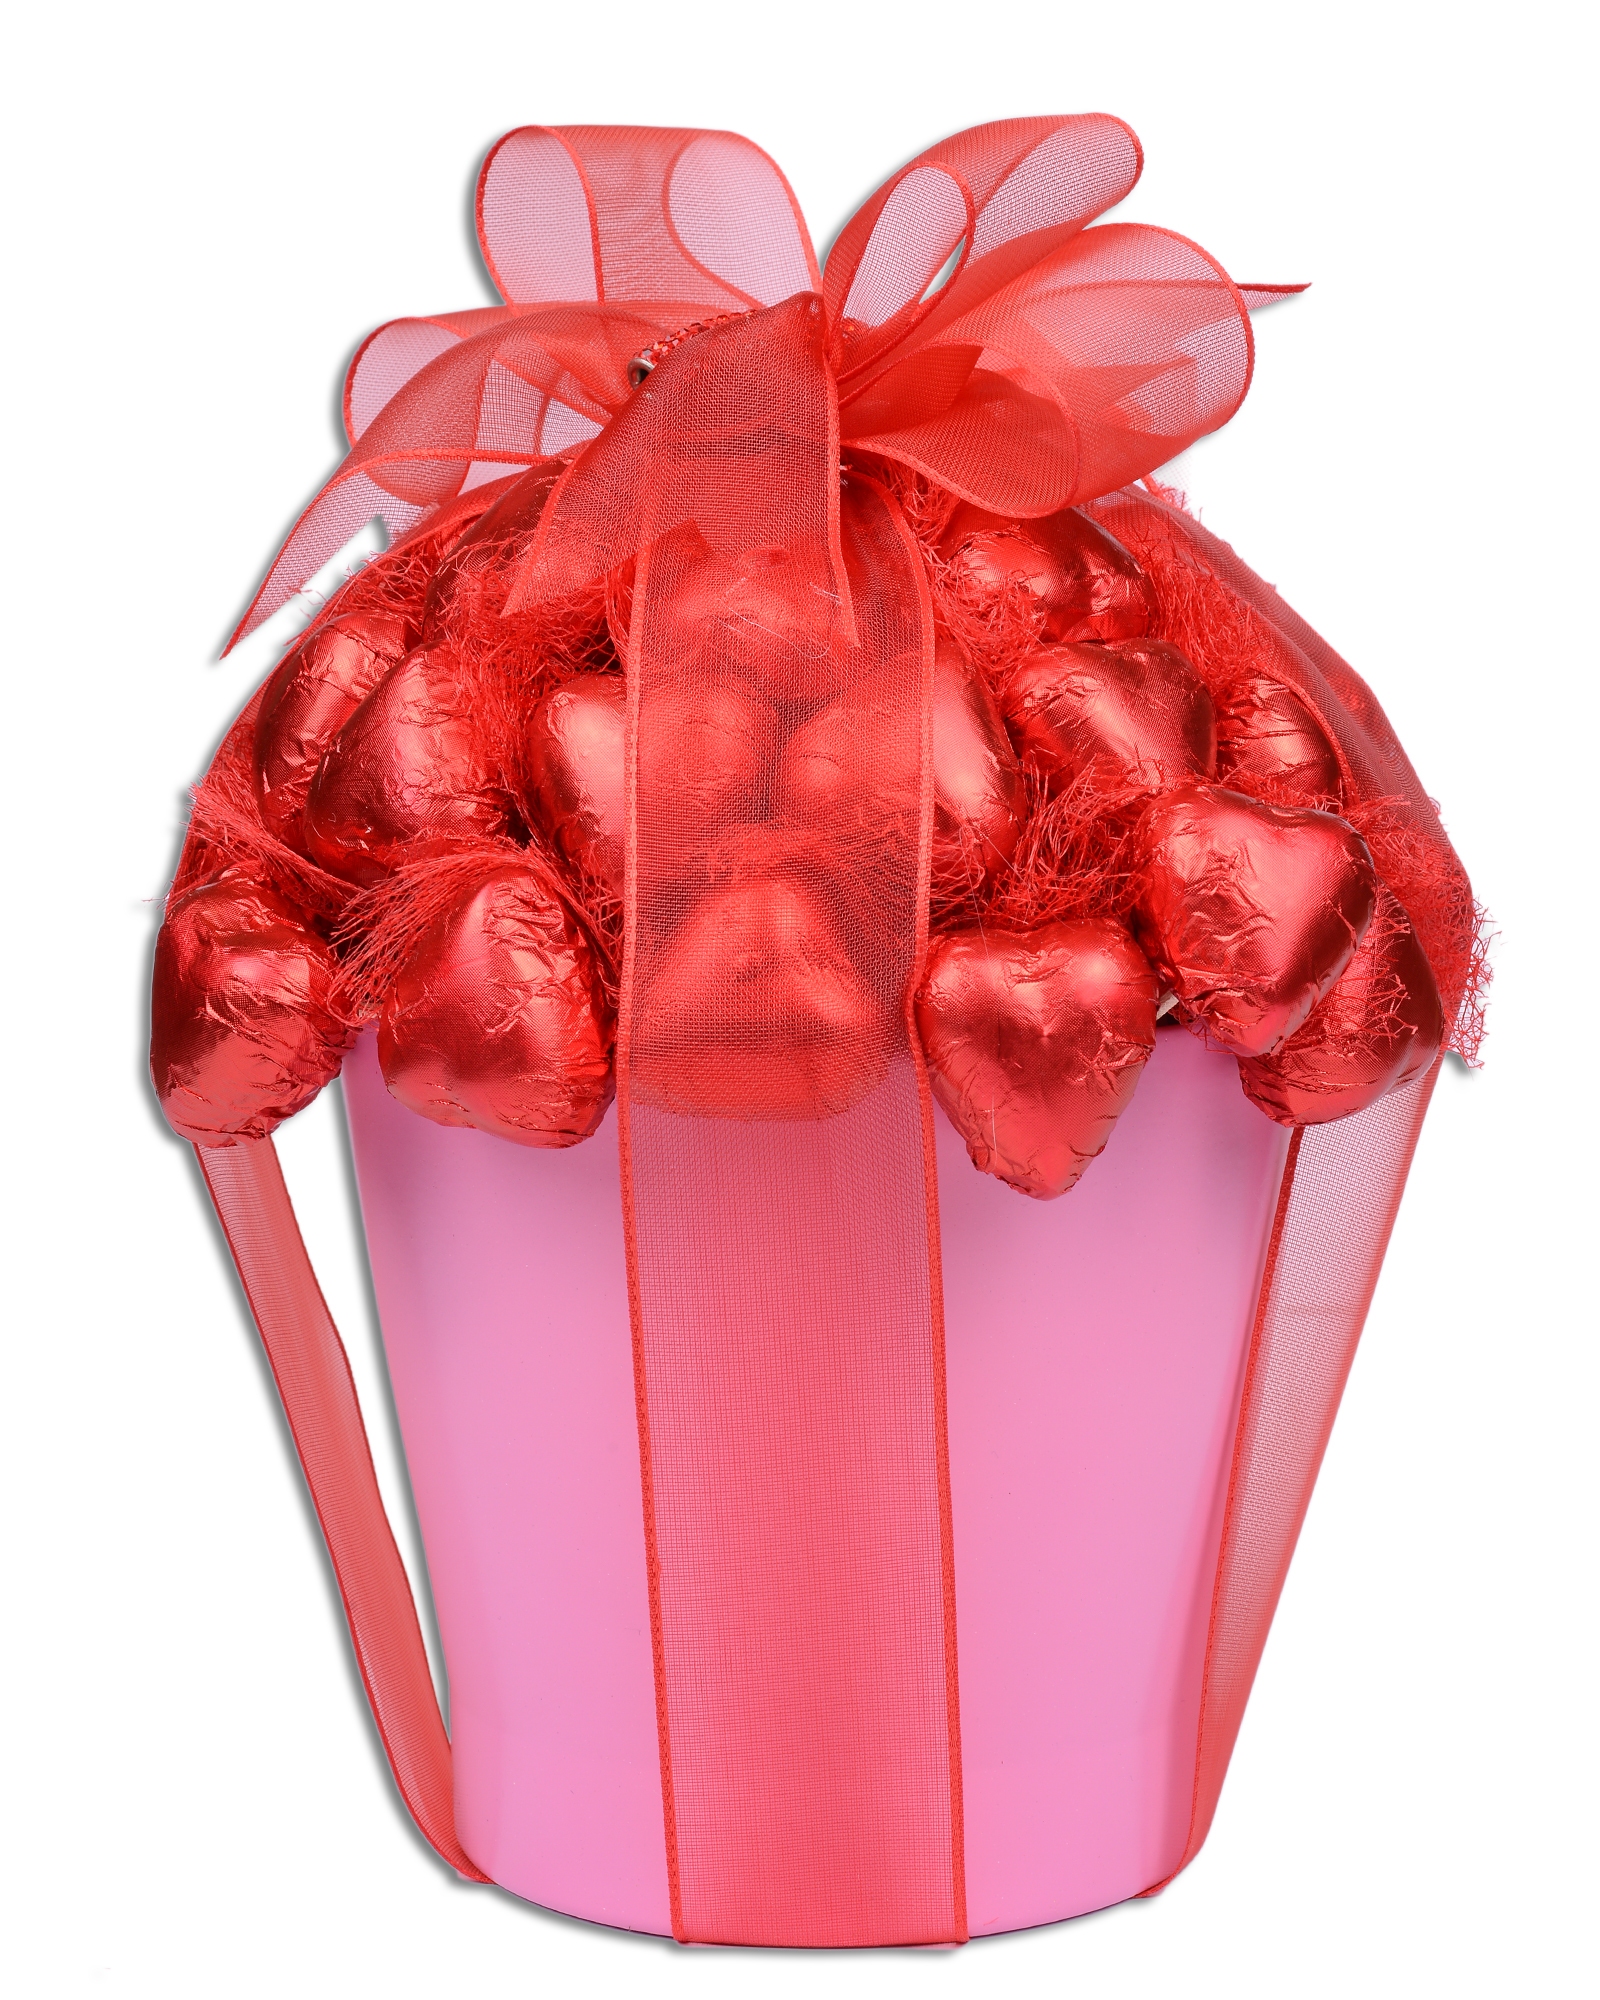 Rengarenk Sevgiliye Çikolata Sepeti  2